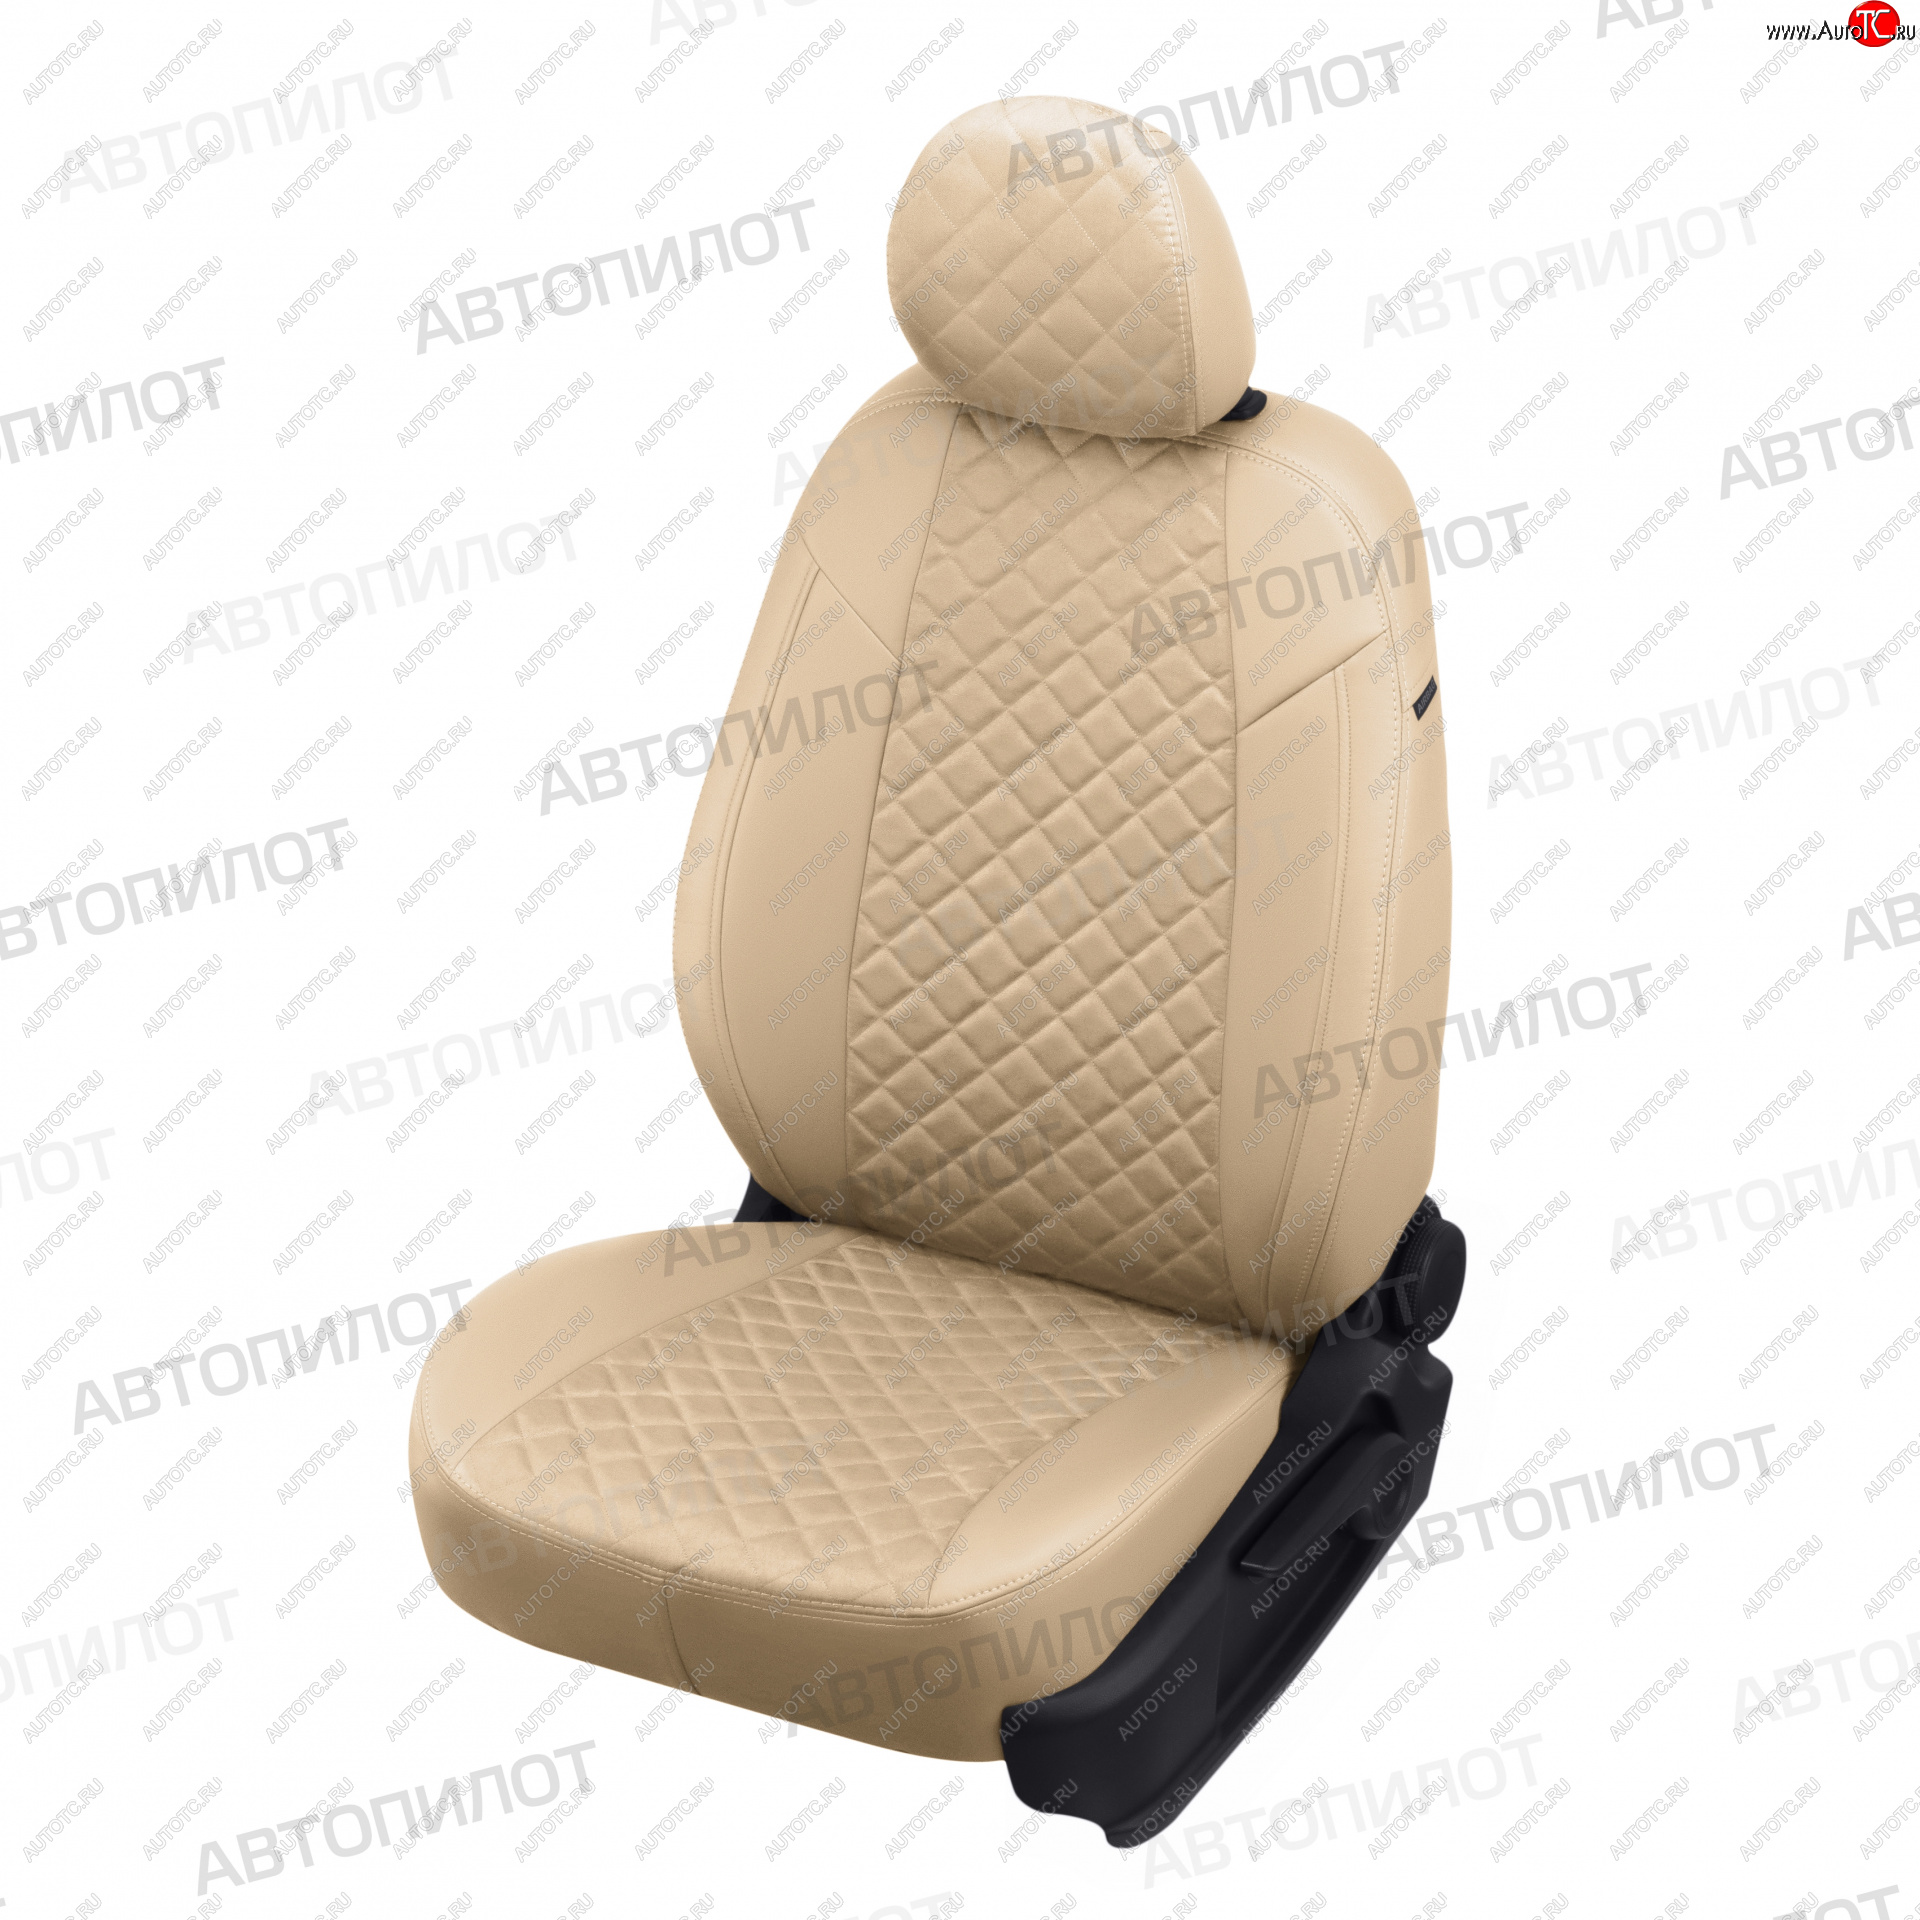 7 799 р. Чехлы сидений (5 мест, экокожа/алькантара) Автопилот Ромб  Ford Galaxy  2 (2006-2015) (бежевый)